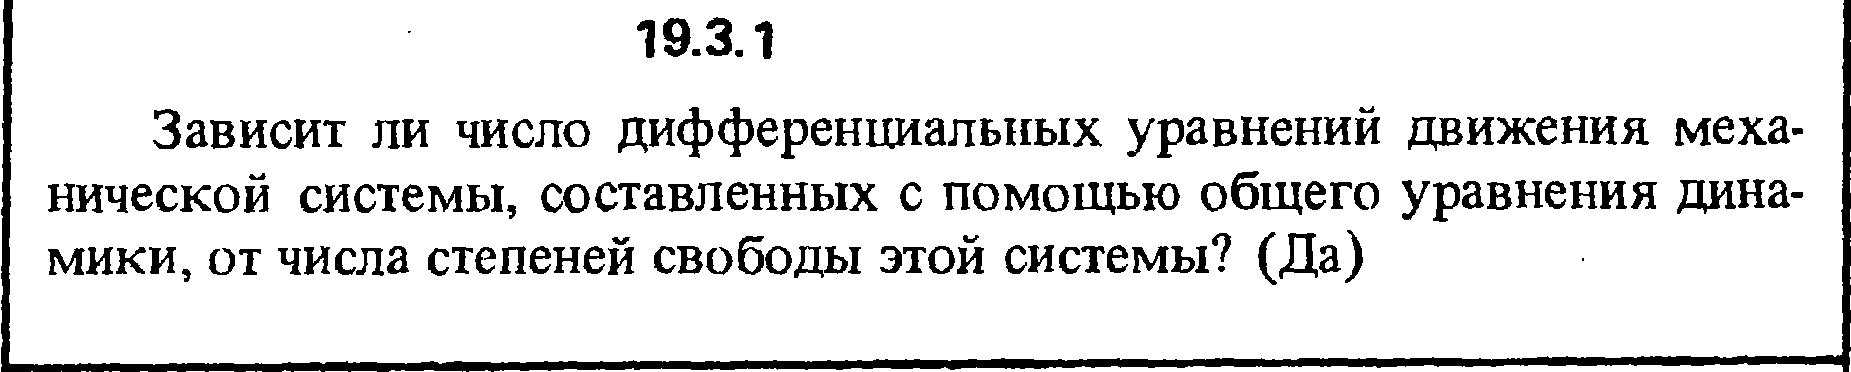 Решение 19.3.1 из сборника (решебника) Кепе О.Е. 1989